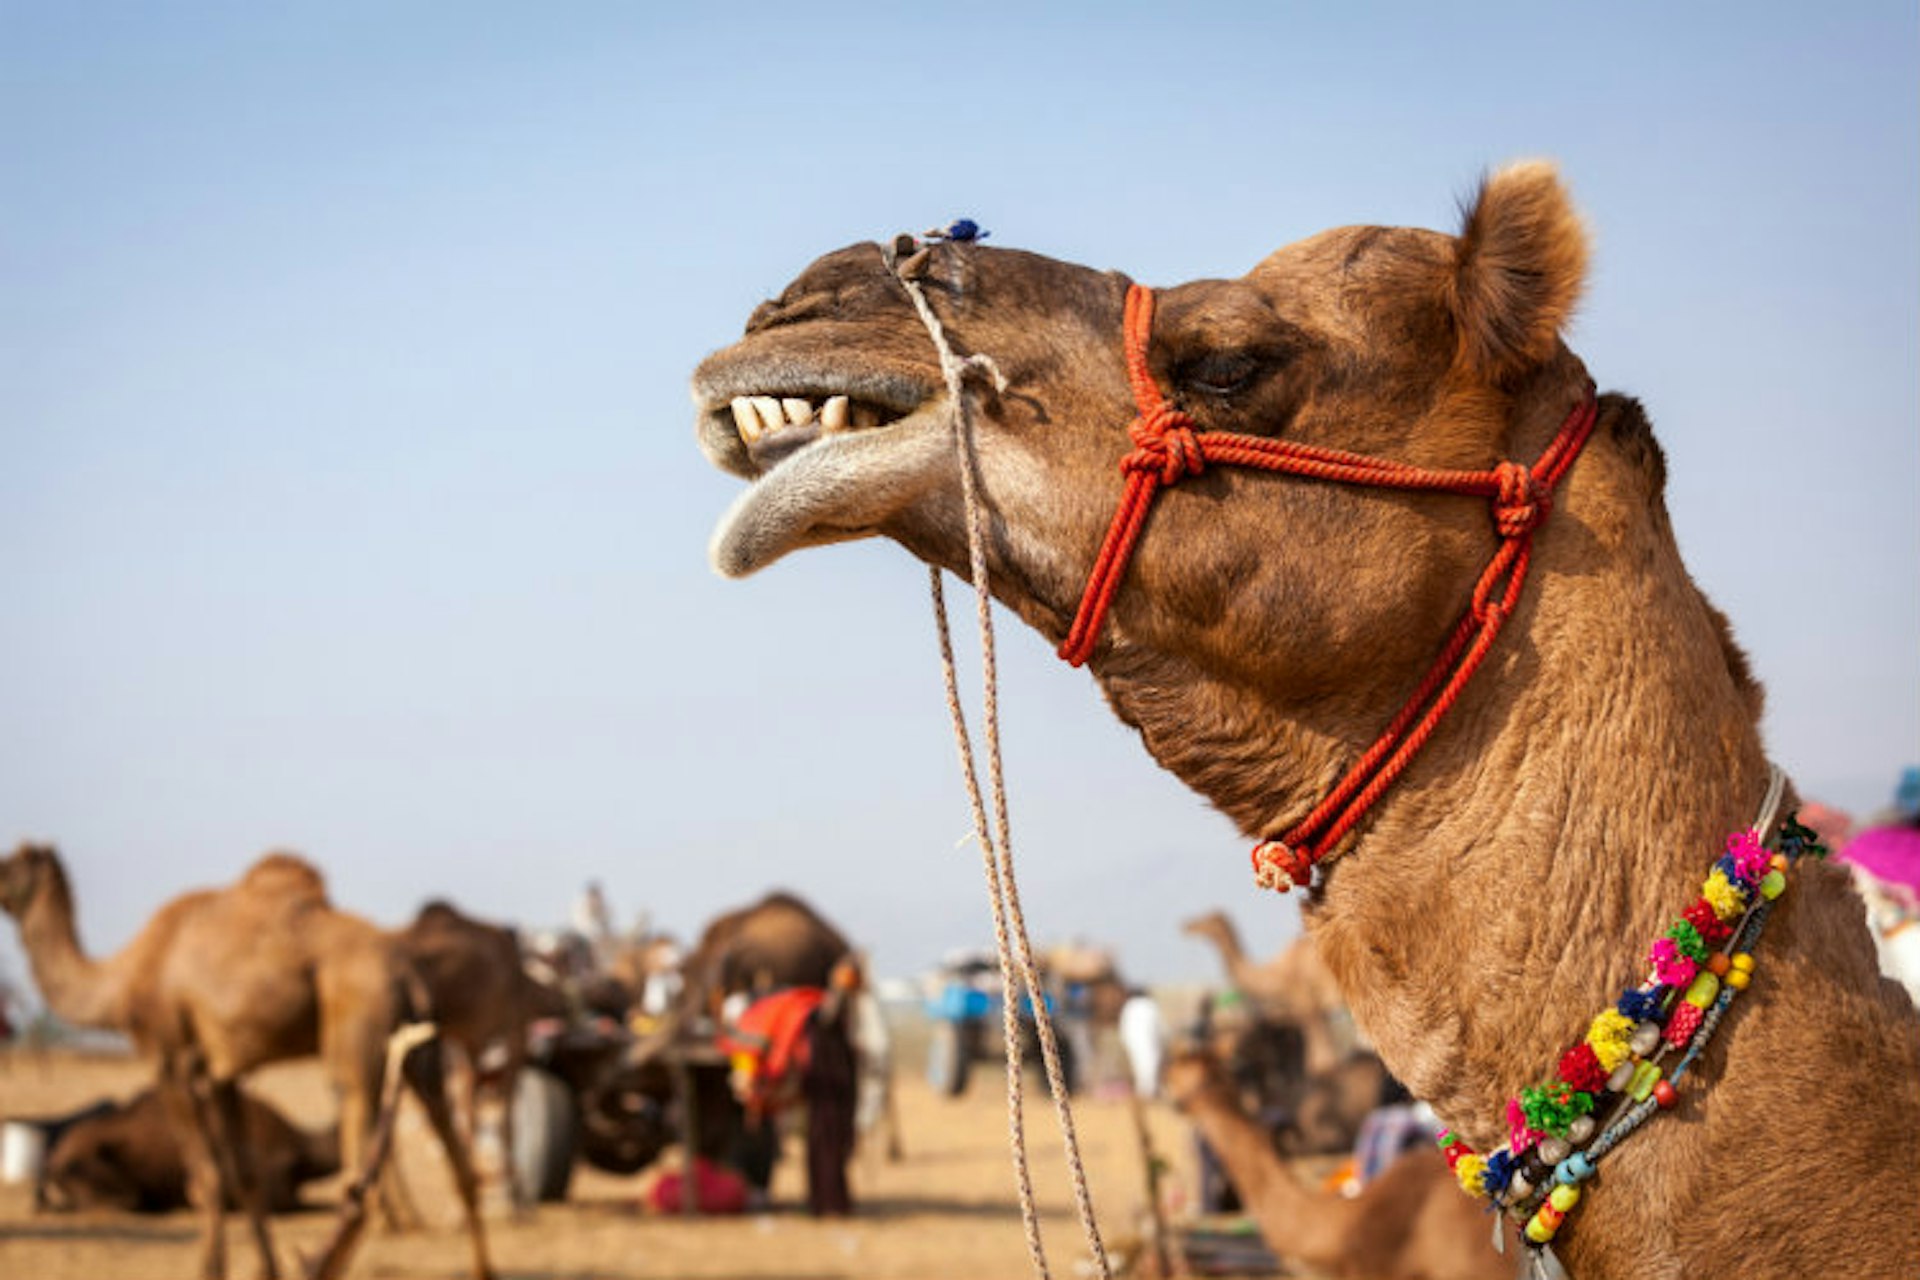 Camel at Pushkar camel fair, Rajasthan, India.